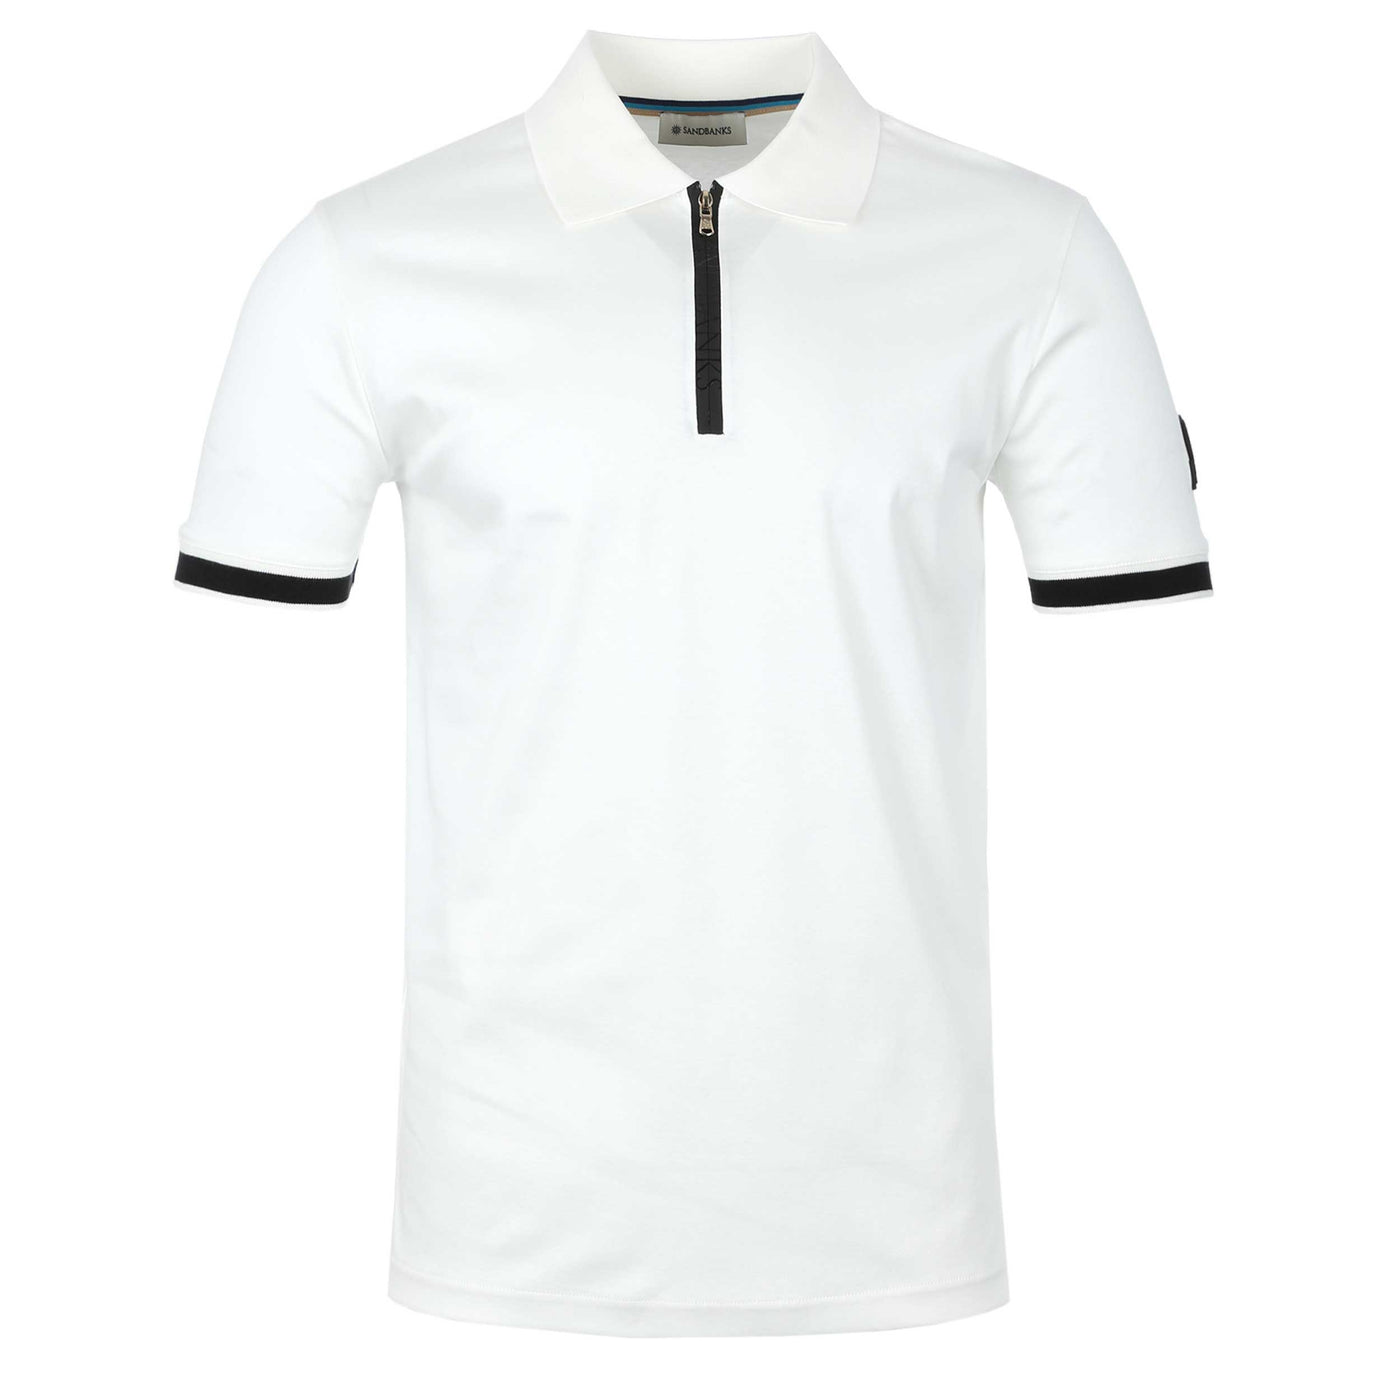 Sandbanks Silicone Zip Polo Shirt in White